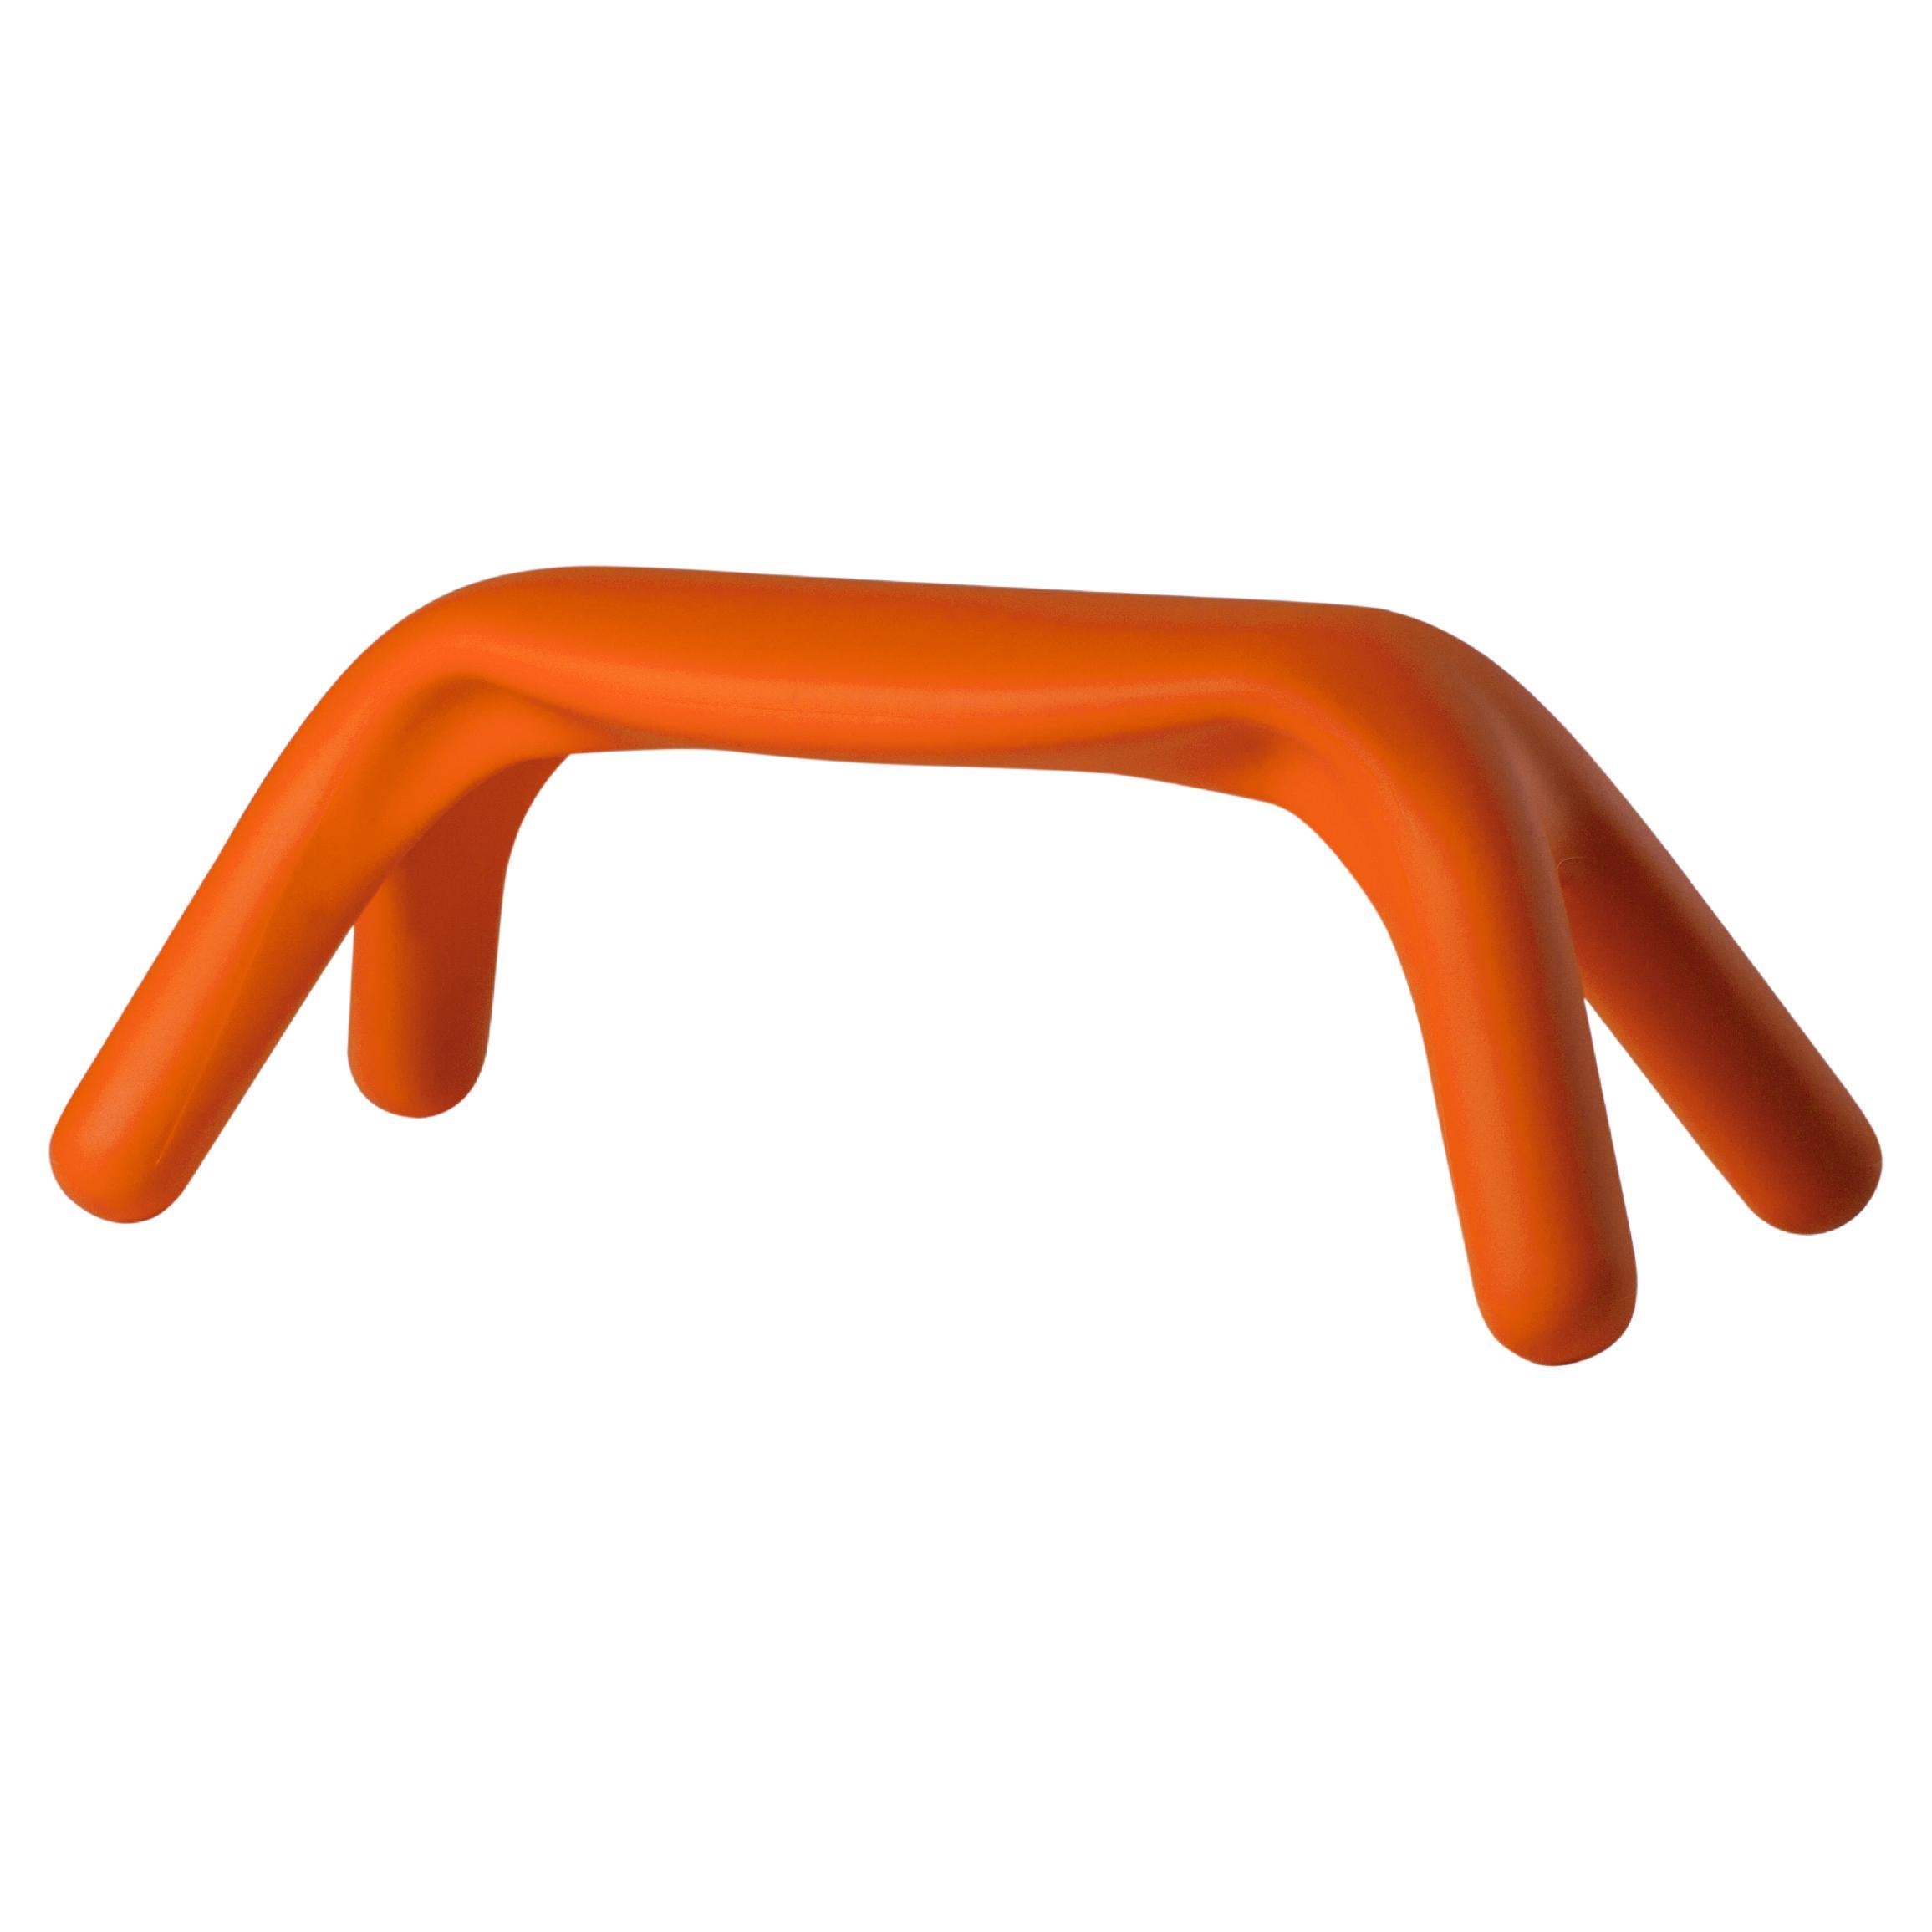 Slide Design Atlas Bench in Pumpkin Orange by Giorgio Biscaro